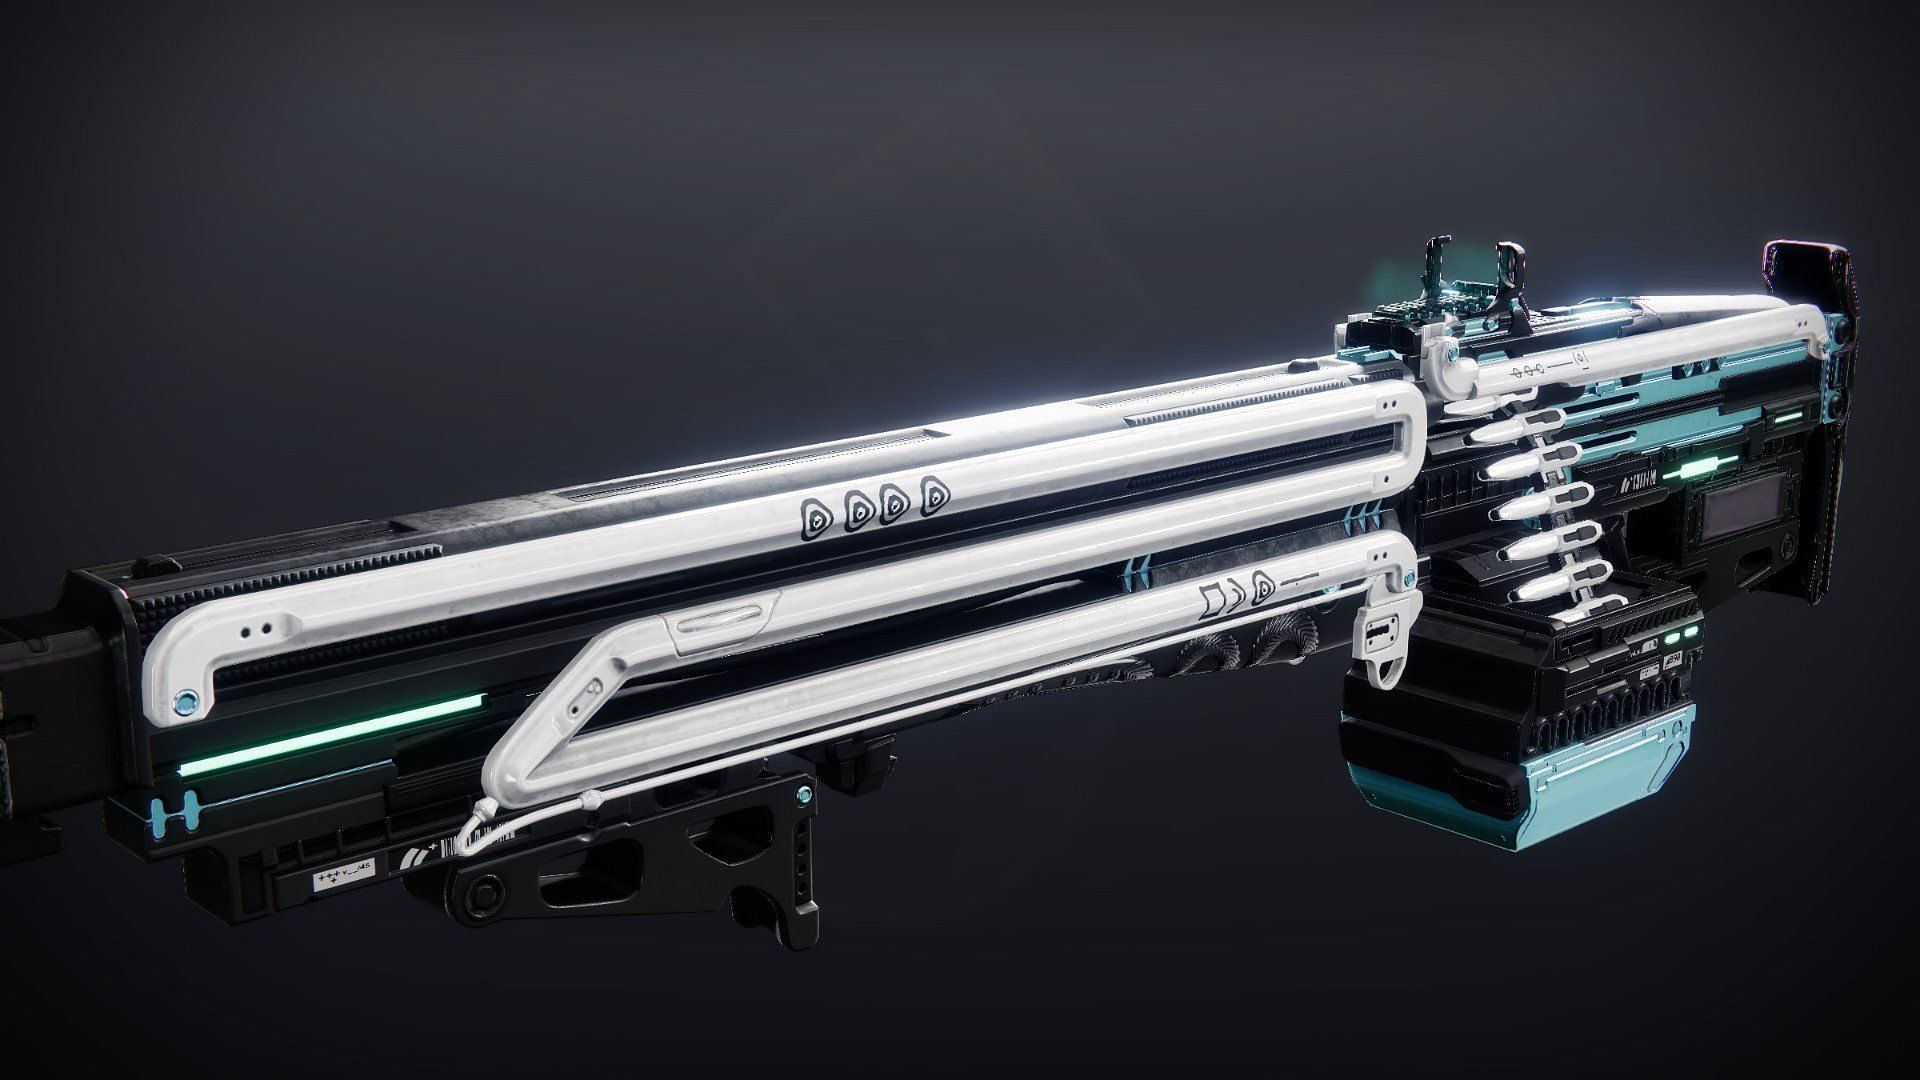 The Commemoration Machine Gun (Image via Destiny 2)